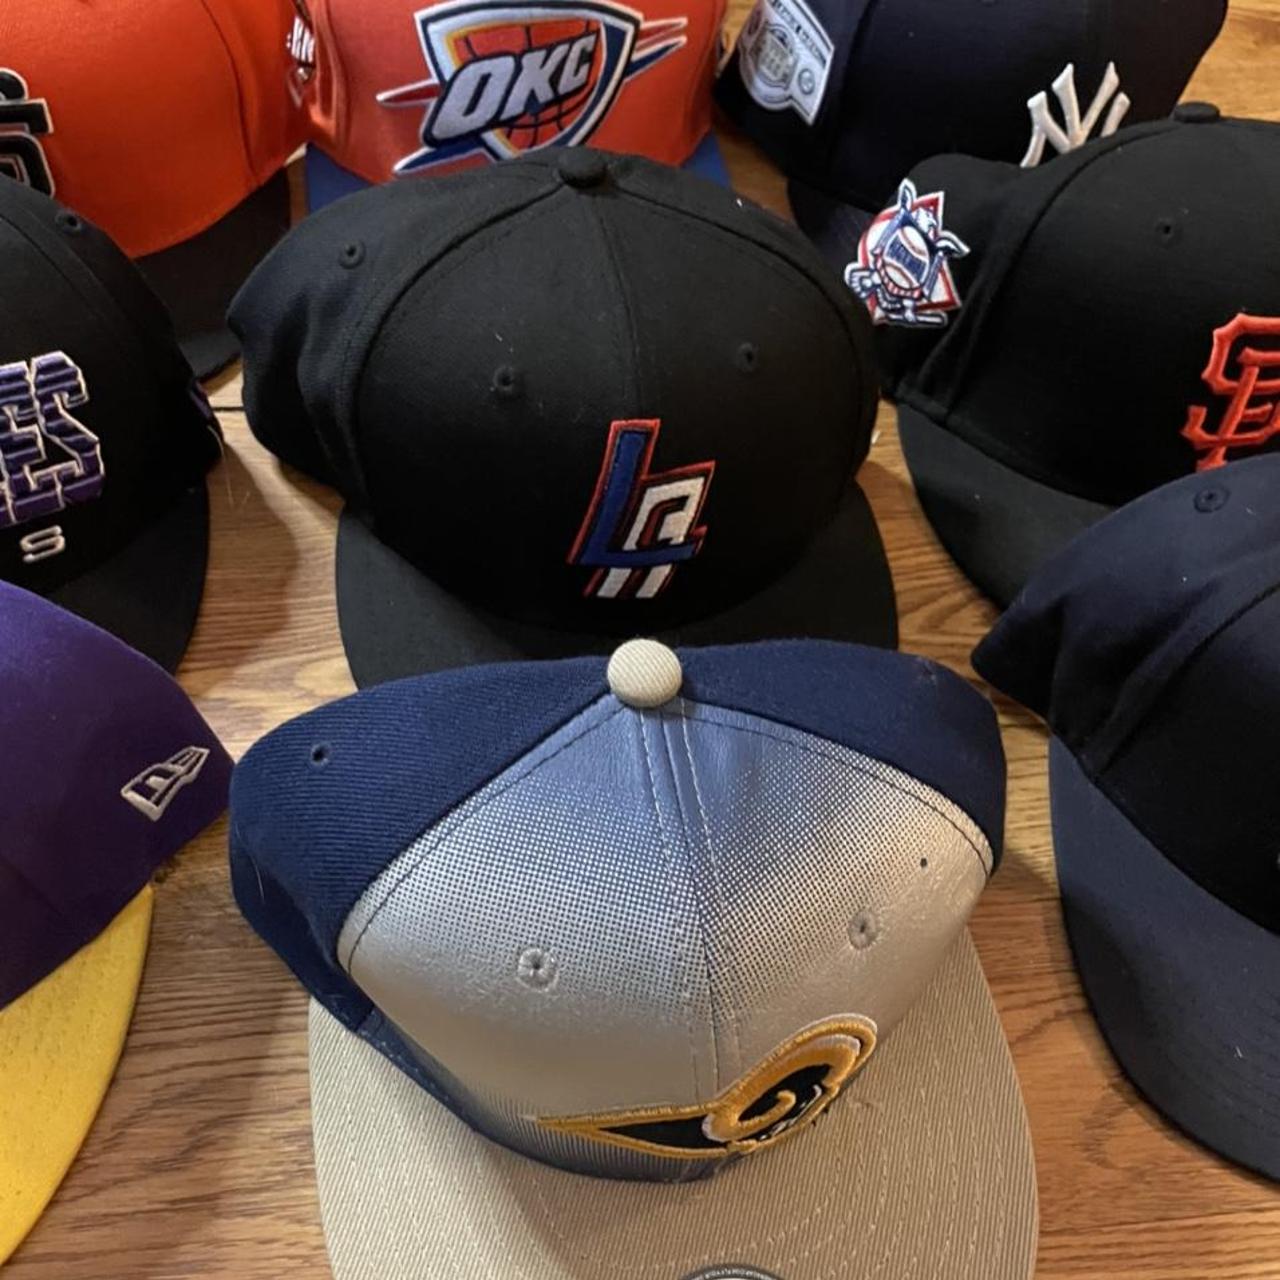 MASSIVE SPOTS OFFICIAL HATS BULK !! 9 hats #sports - Depop